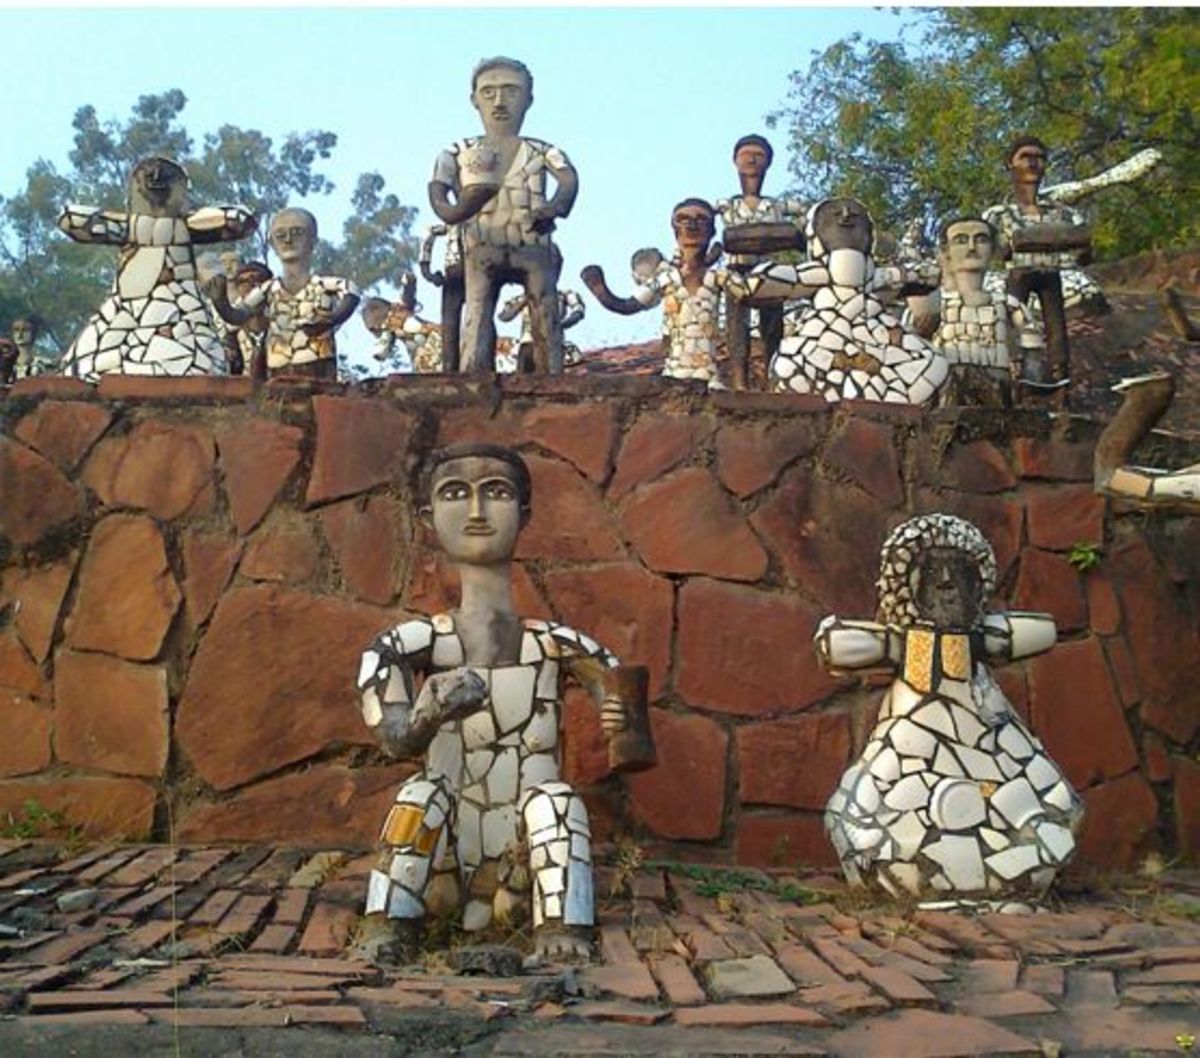 Rock Garden Chandigarh - Story of an Amazing Human Creation